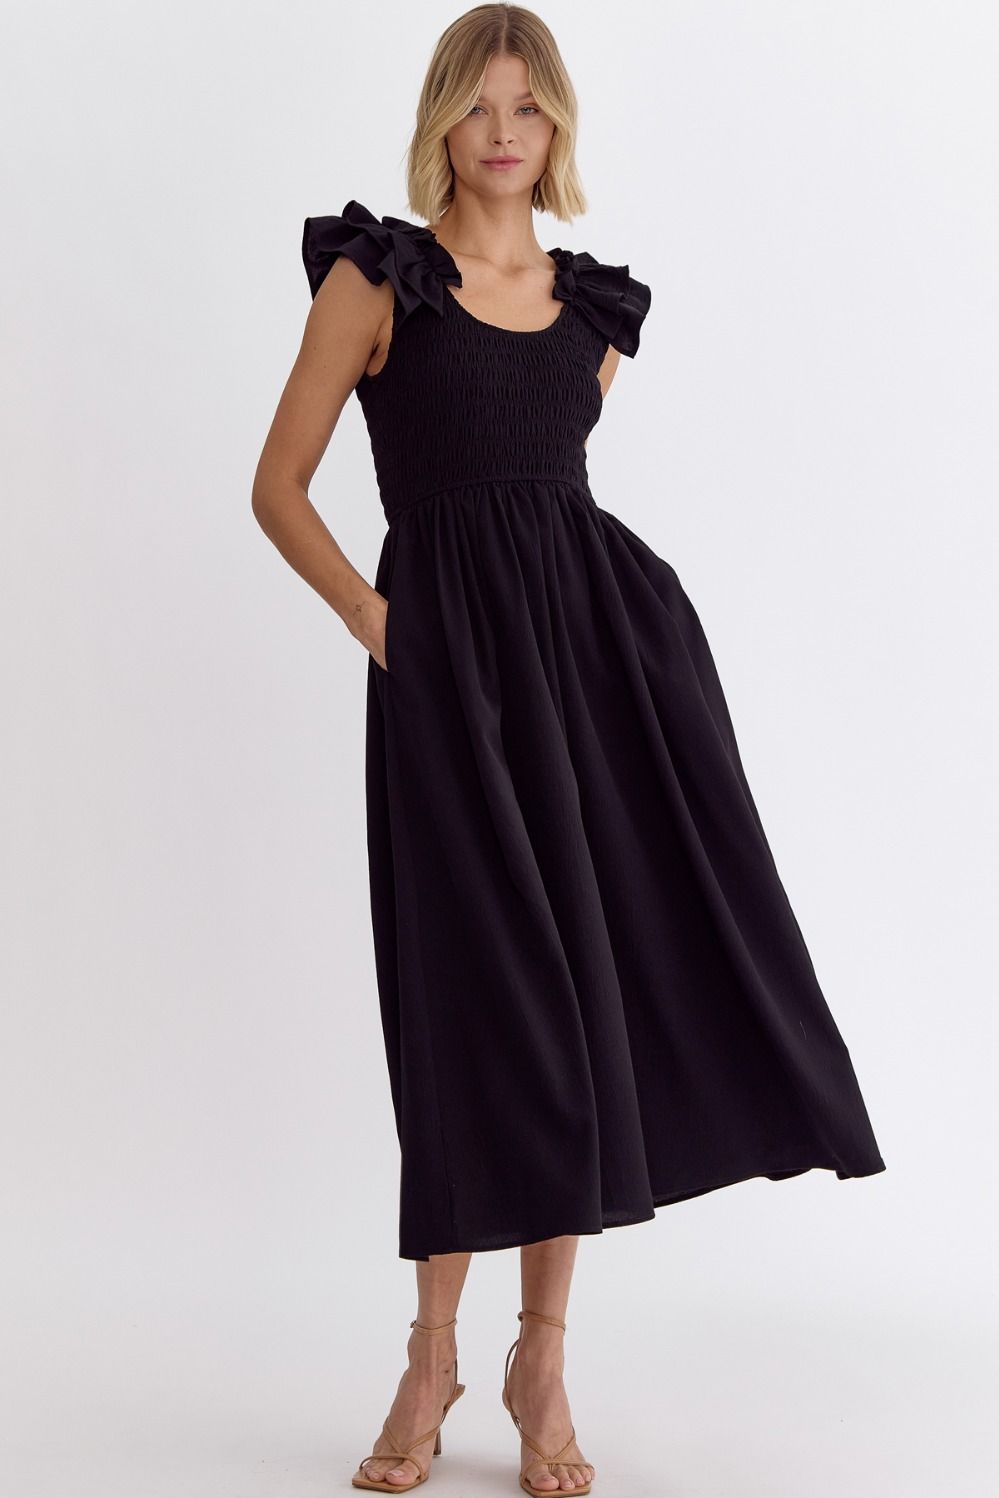 ENTRO INC Women's Dresses BLACK / S Solid Sleeveless Smocked Midi Dress || David's Clothing D21279